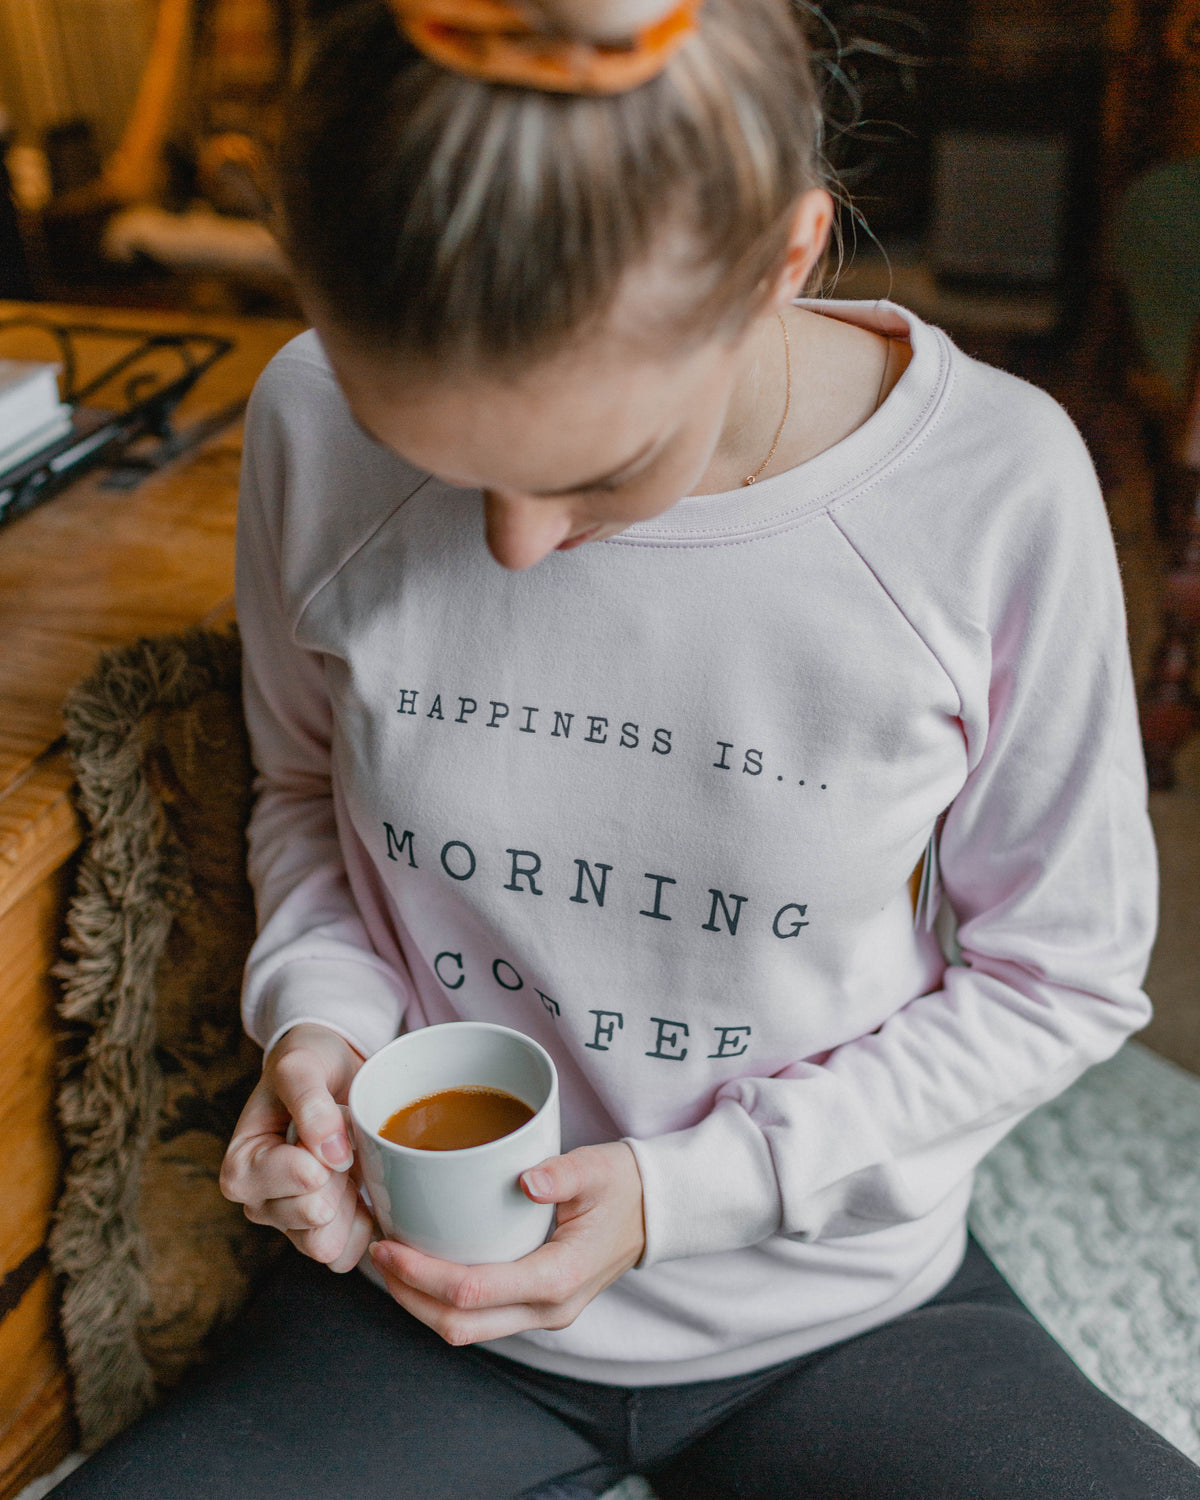 Happiness is morning coffee Crew Sweatshirt Ballet Pink